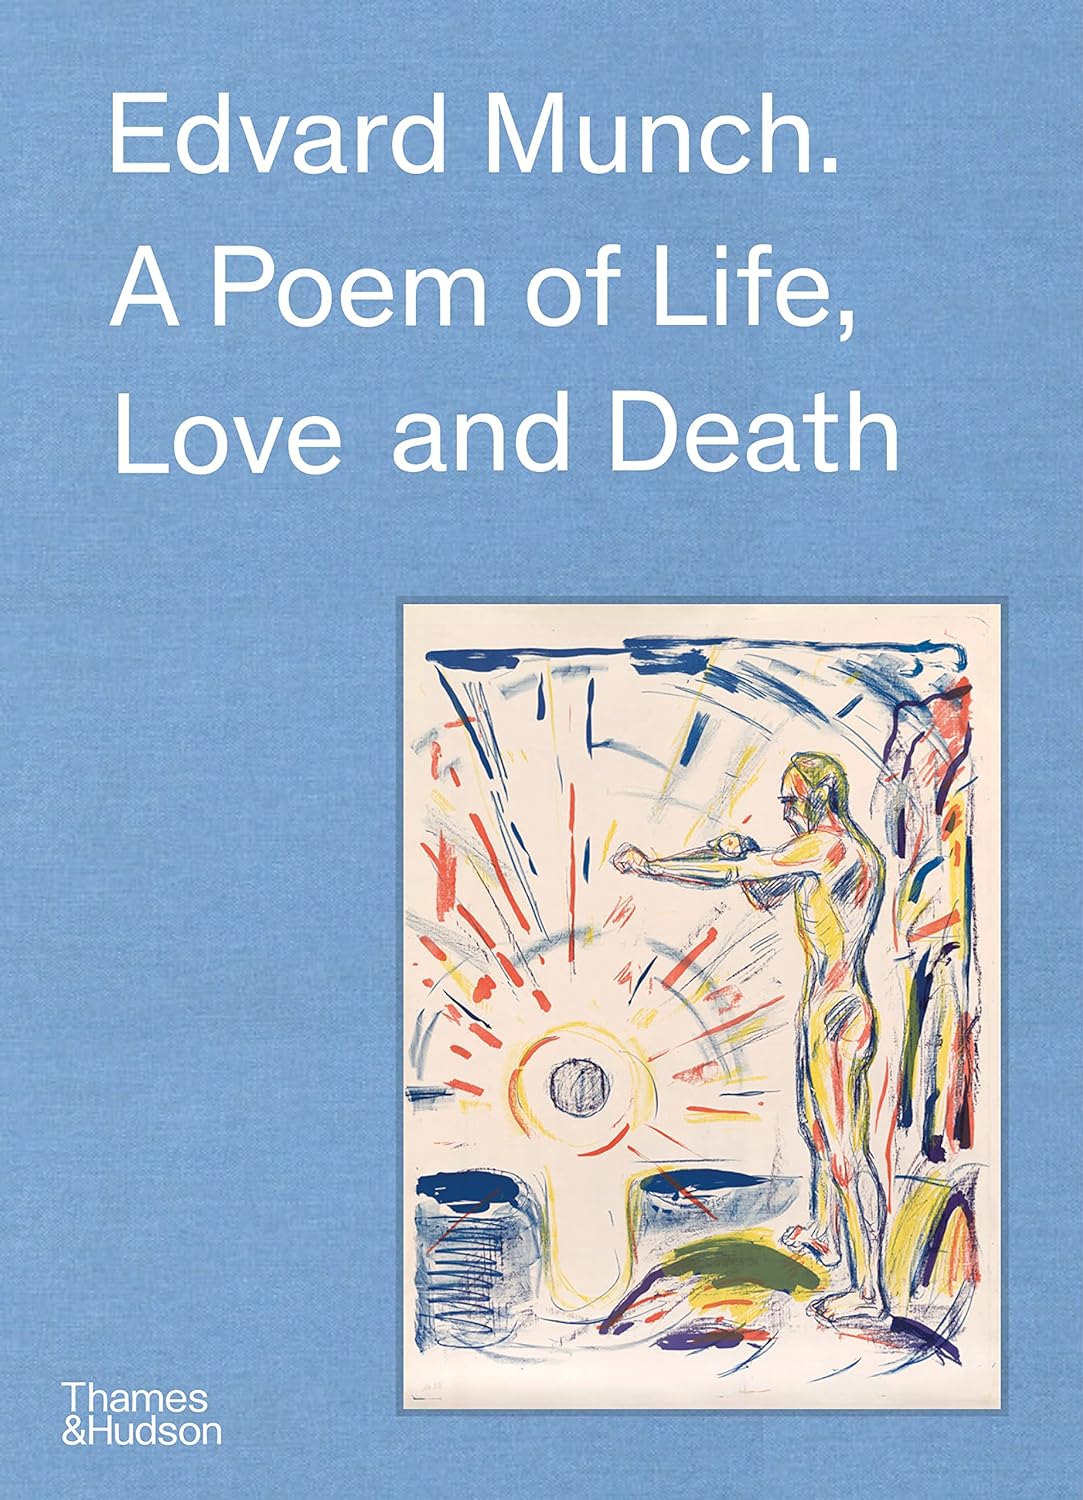 Edvard Munch - A Poem of Life